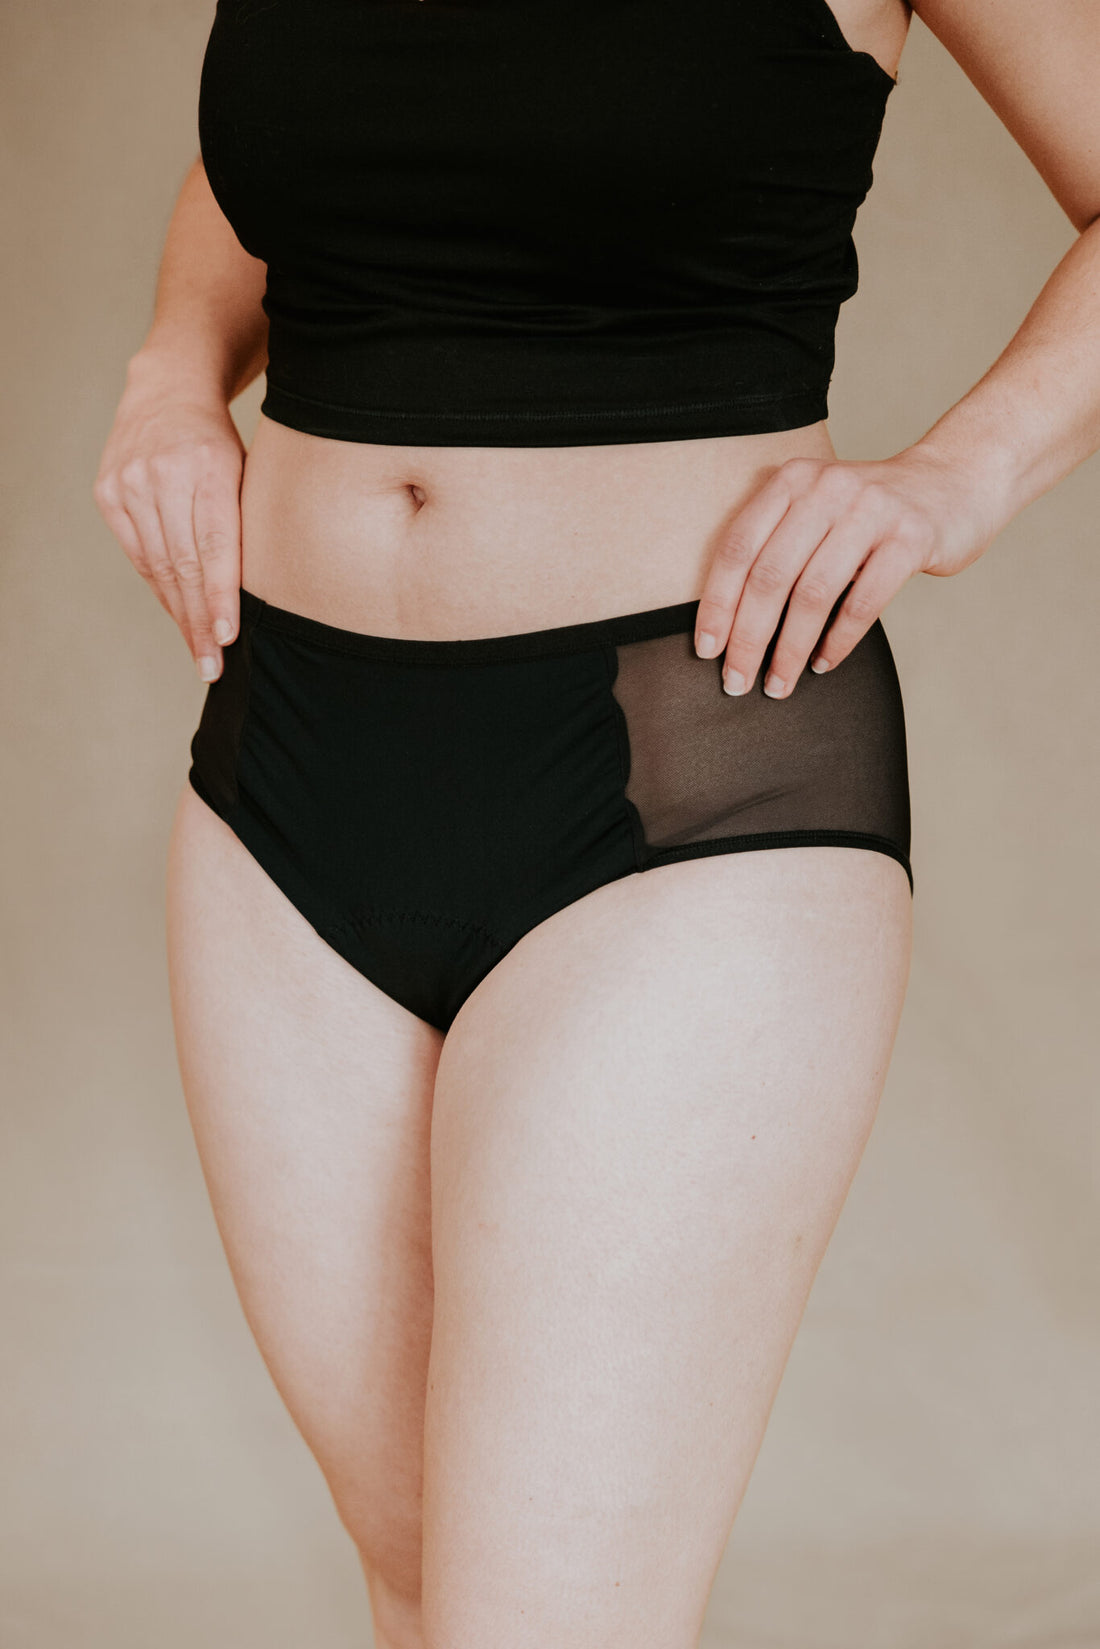 Ora protections- culotte menstruelle taille haute avec mesh